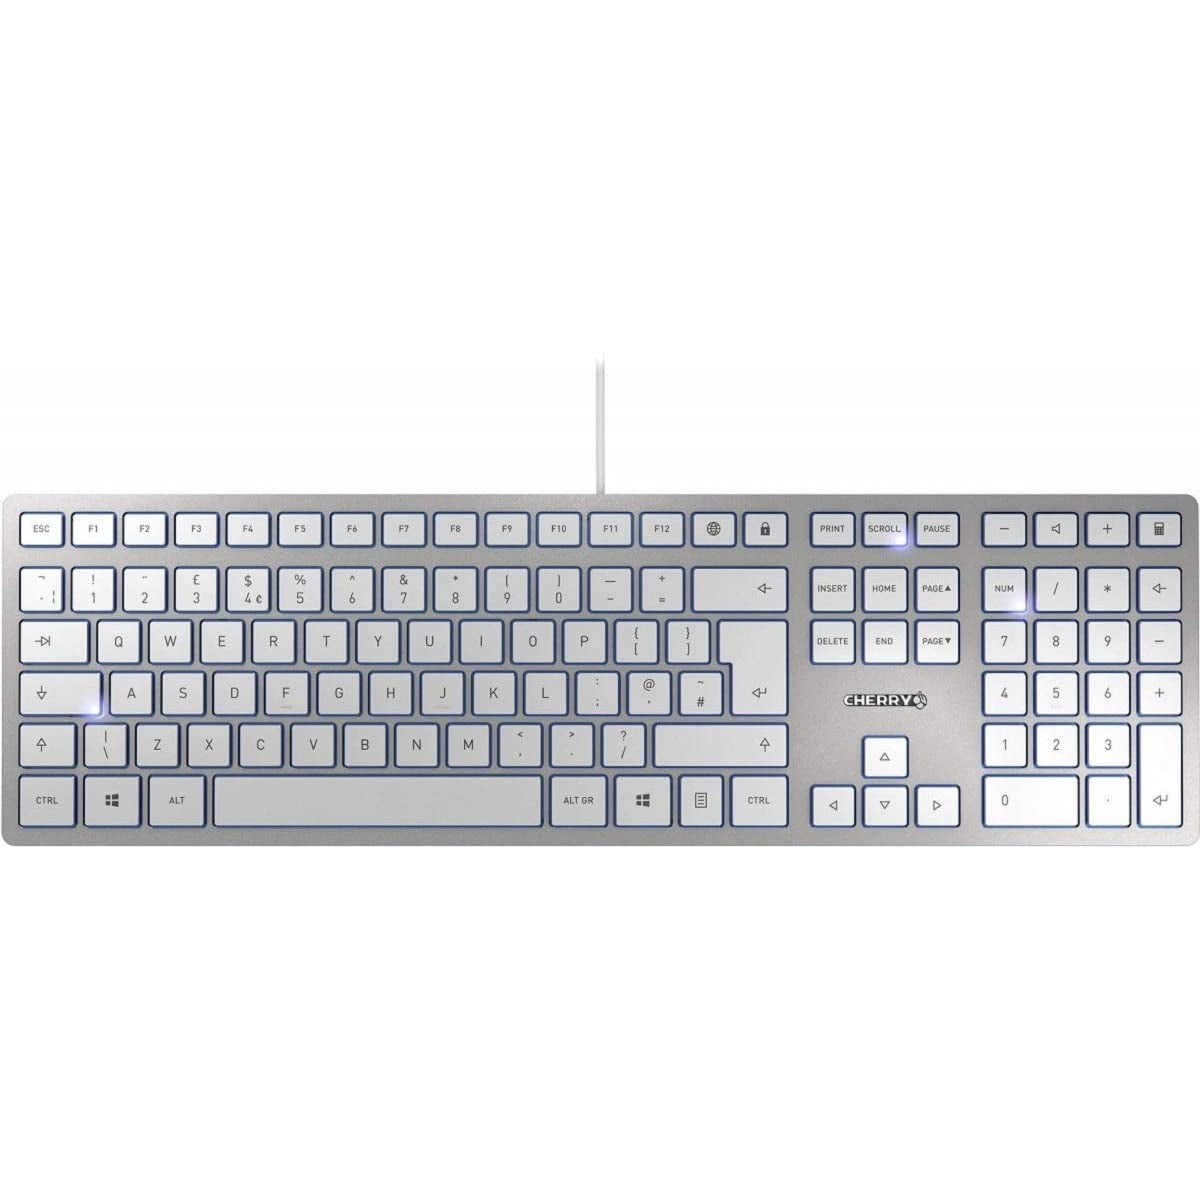 Cherry KC 6000 slim keyboard, silver, QWERTY layout